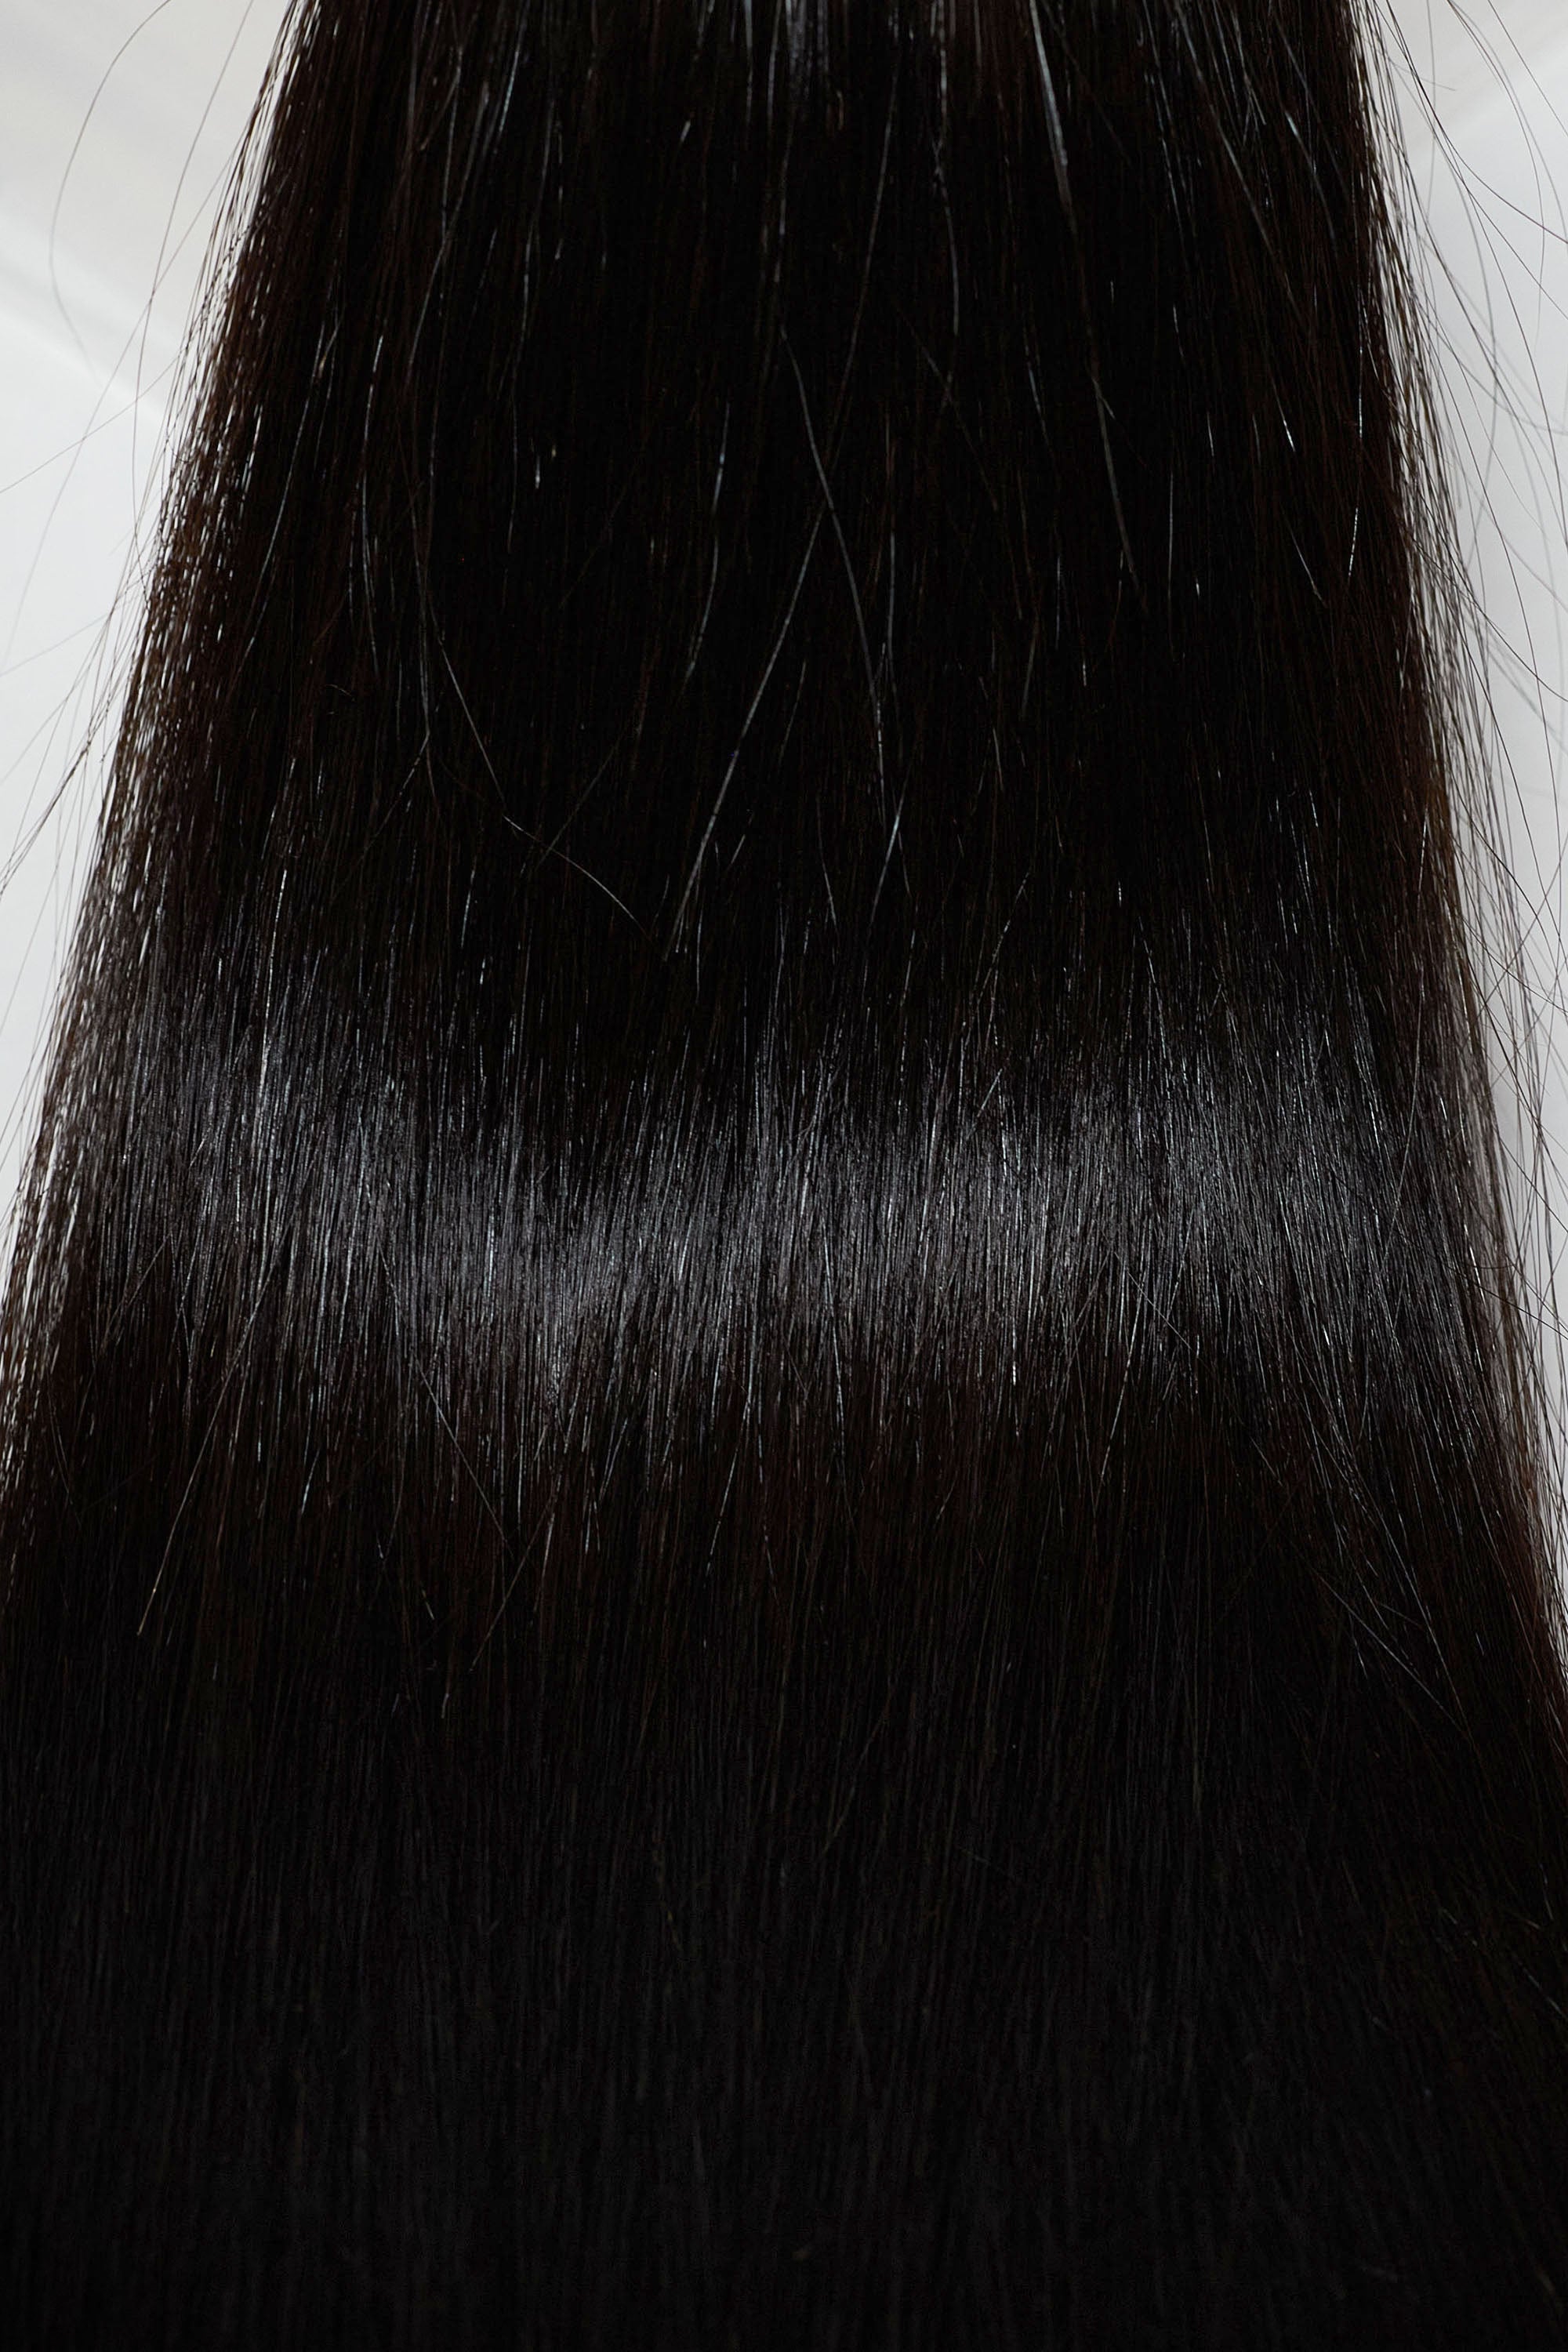 Behair professional Keratin Tip "Premium" 16" (40cm) Natural Straight Jet Black #1 - 25g (Standart - 0.7g each pcs) hair extensions